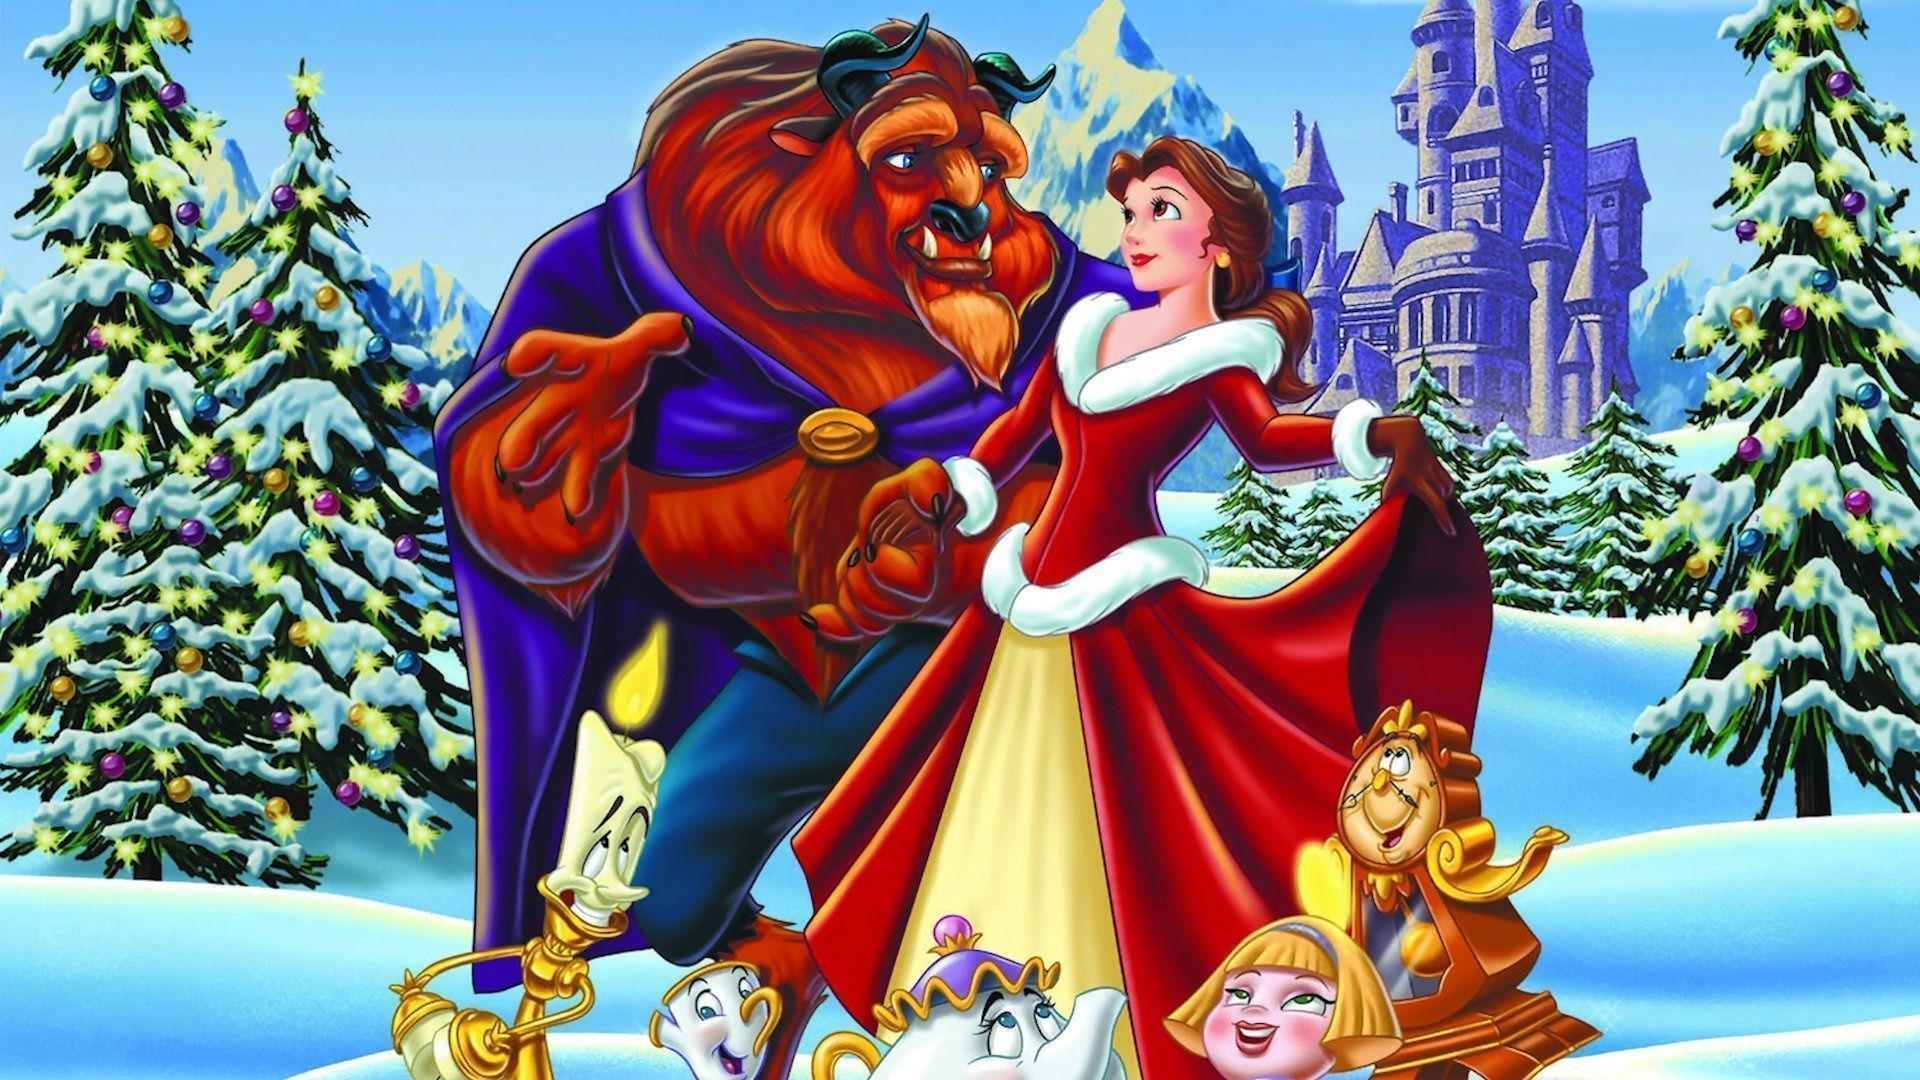 Disney Background wallpaper